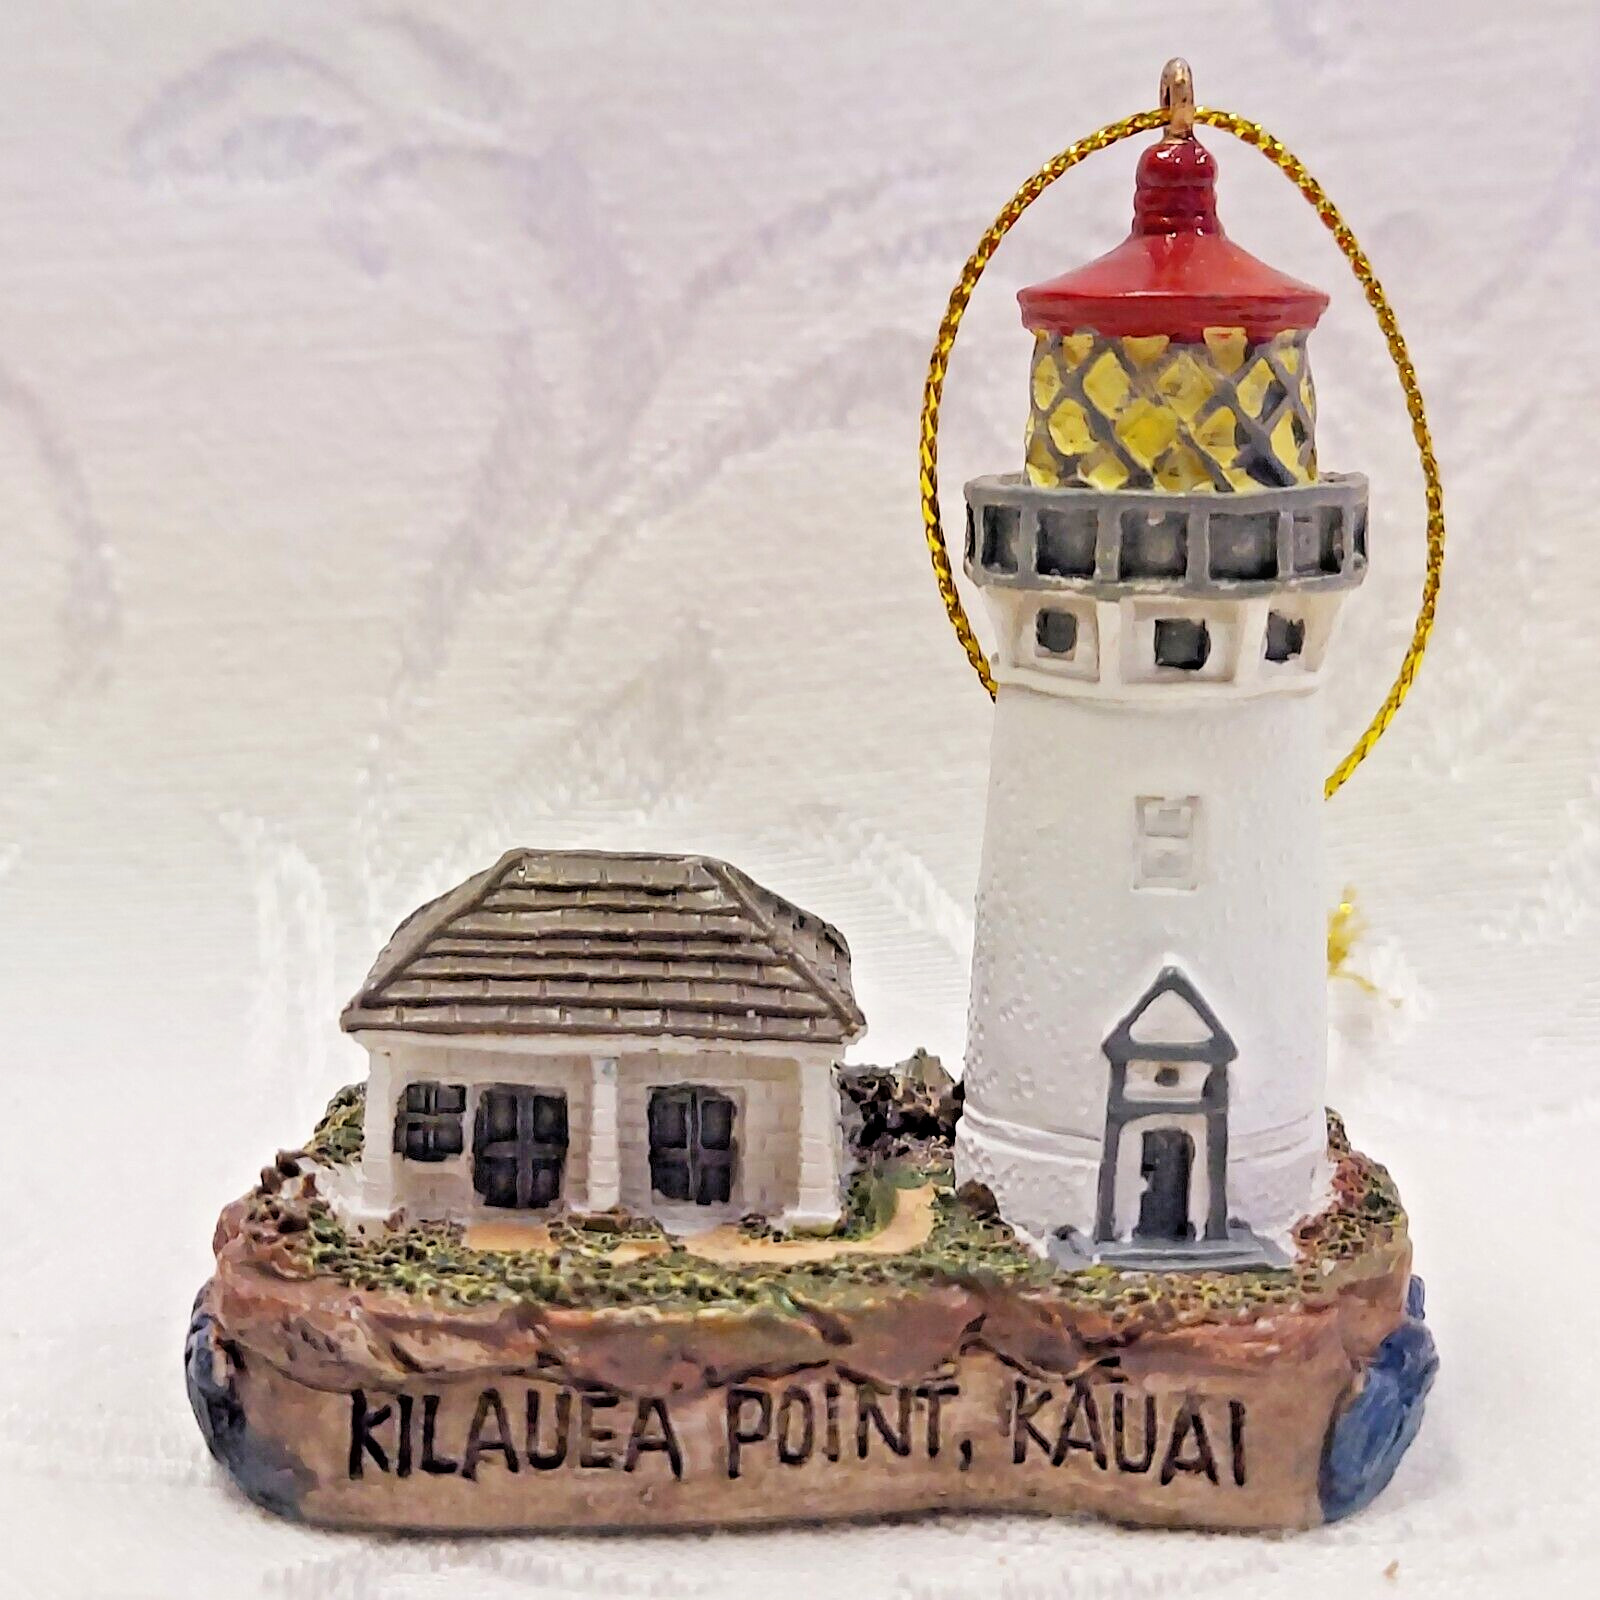 Miniature Kilauea Point Kauai, Hawaii Lighthouse by Golder Image, Inc Souvenir